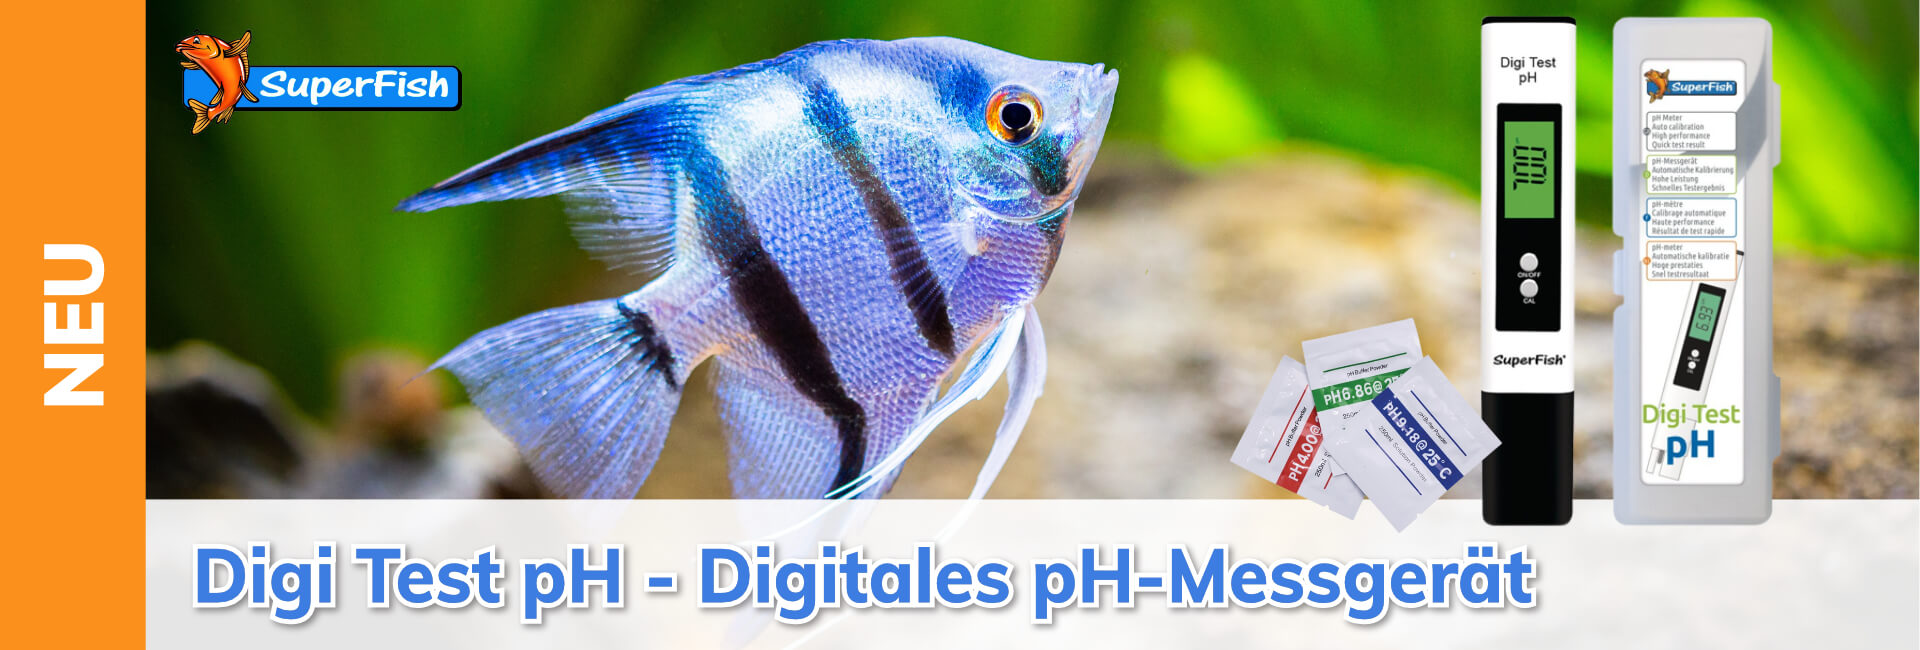 SuperFish Digi Test pH - Digitales pH-Messgerät